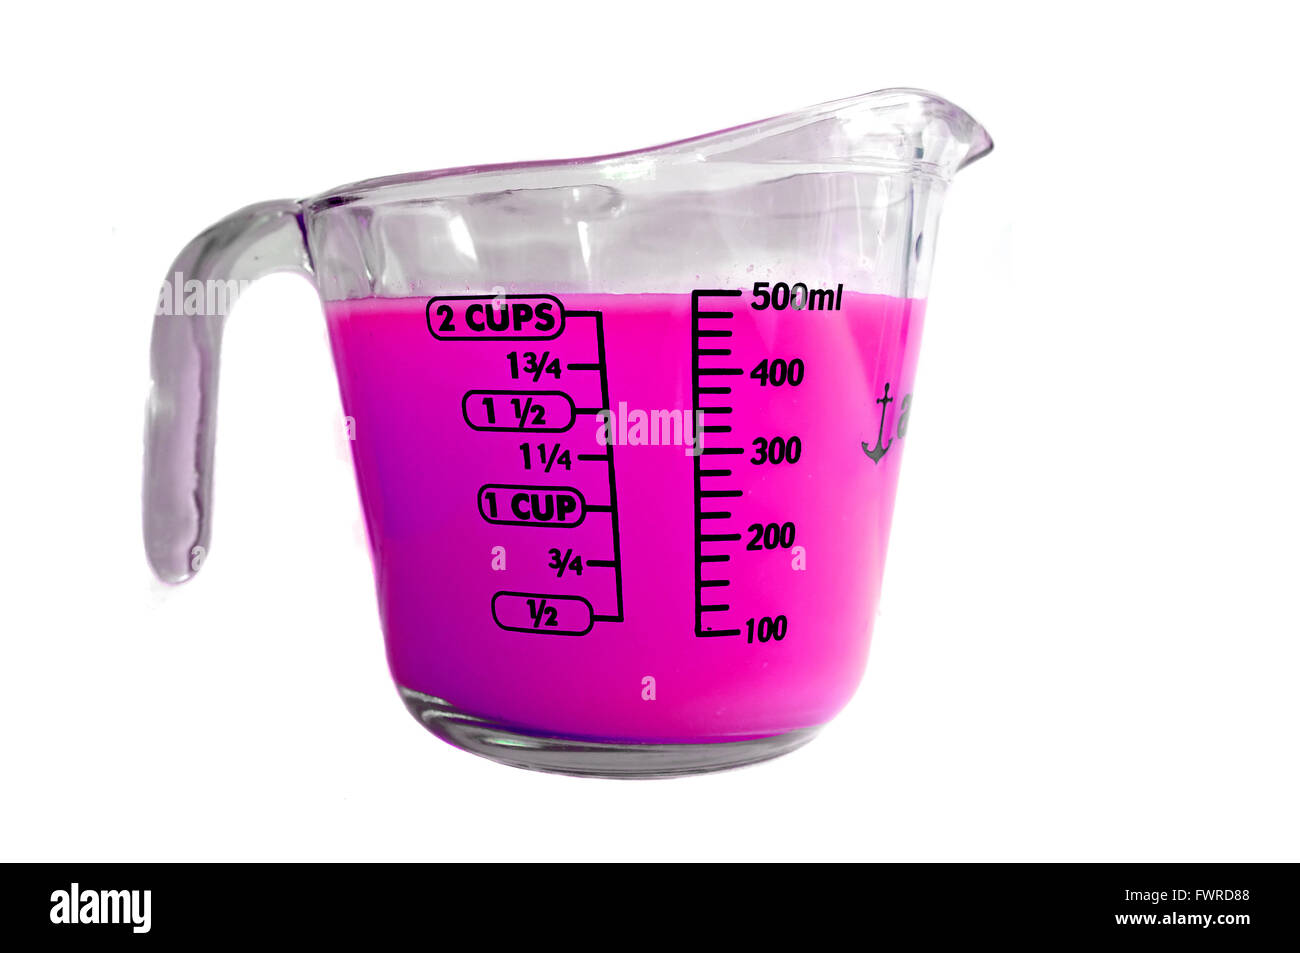 https://c8.alamy.com/comp/FWRD88/a-pyrex-measuring-jug-full-of-pink-coloured-liquid-photographed-against-FWRD88.jpg